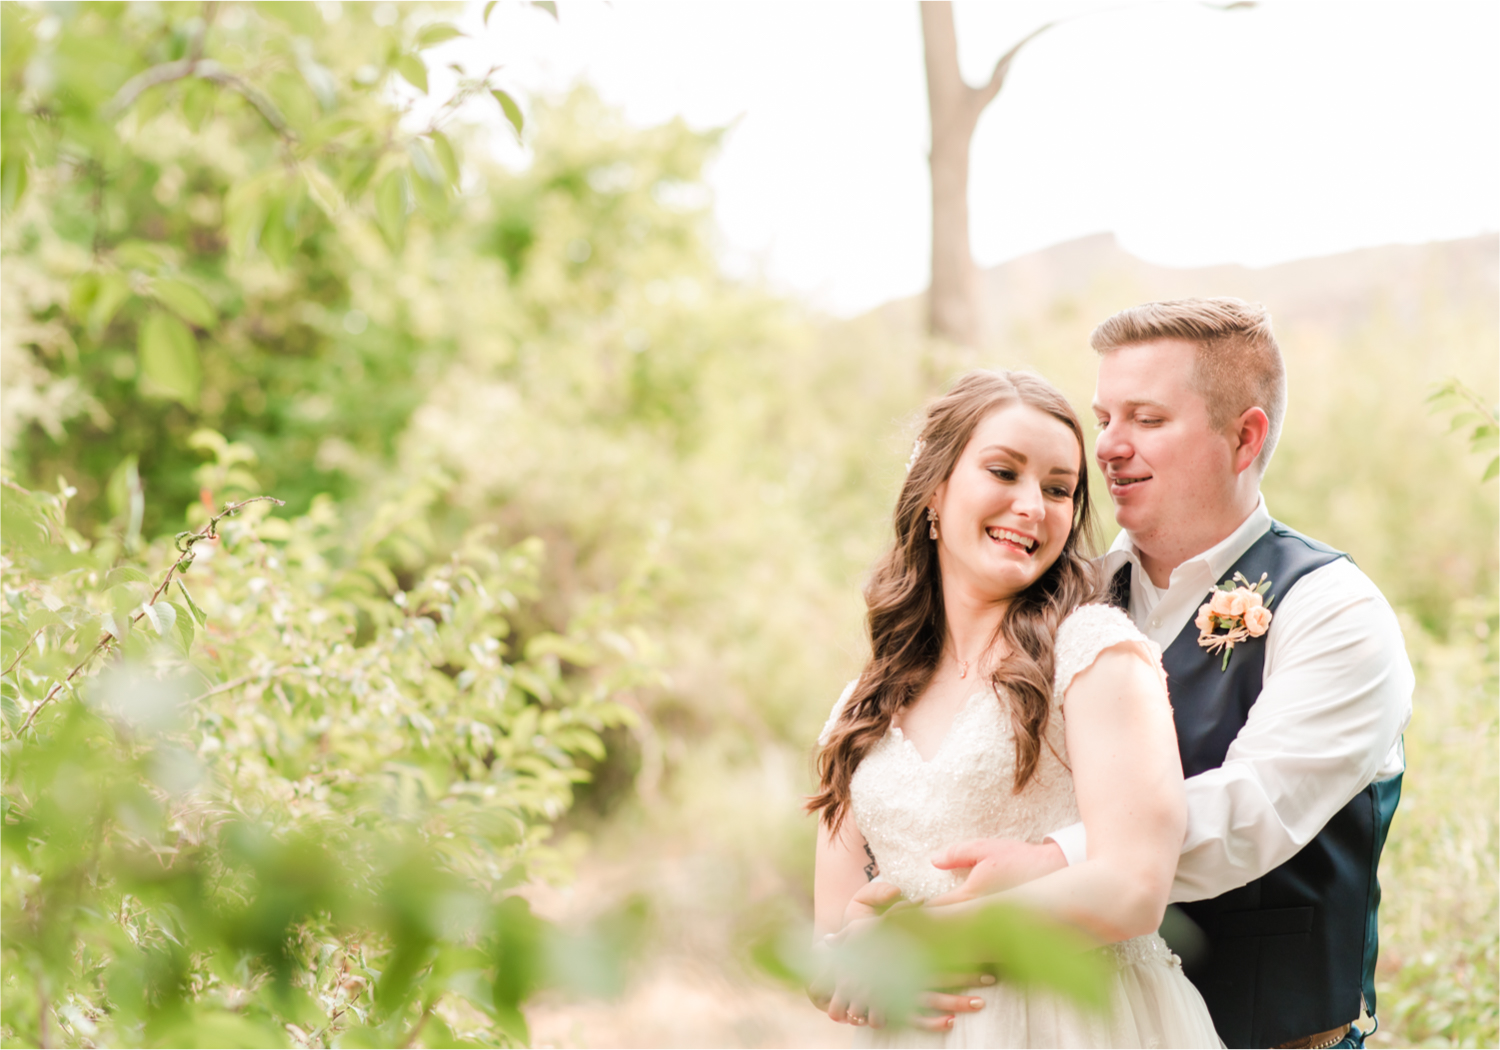 Summer Ellis Ranch Wedding in Loveland Colorado | Britni Girard Photography | Wedding Photo and Video Team | Bride and Groom Romantic Trail Walk